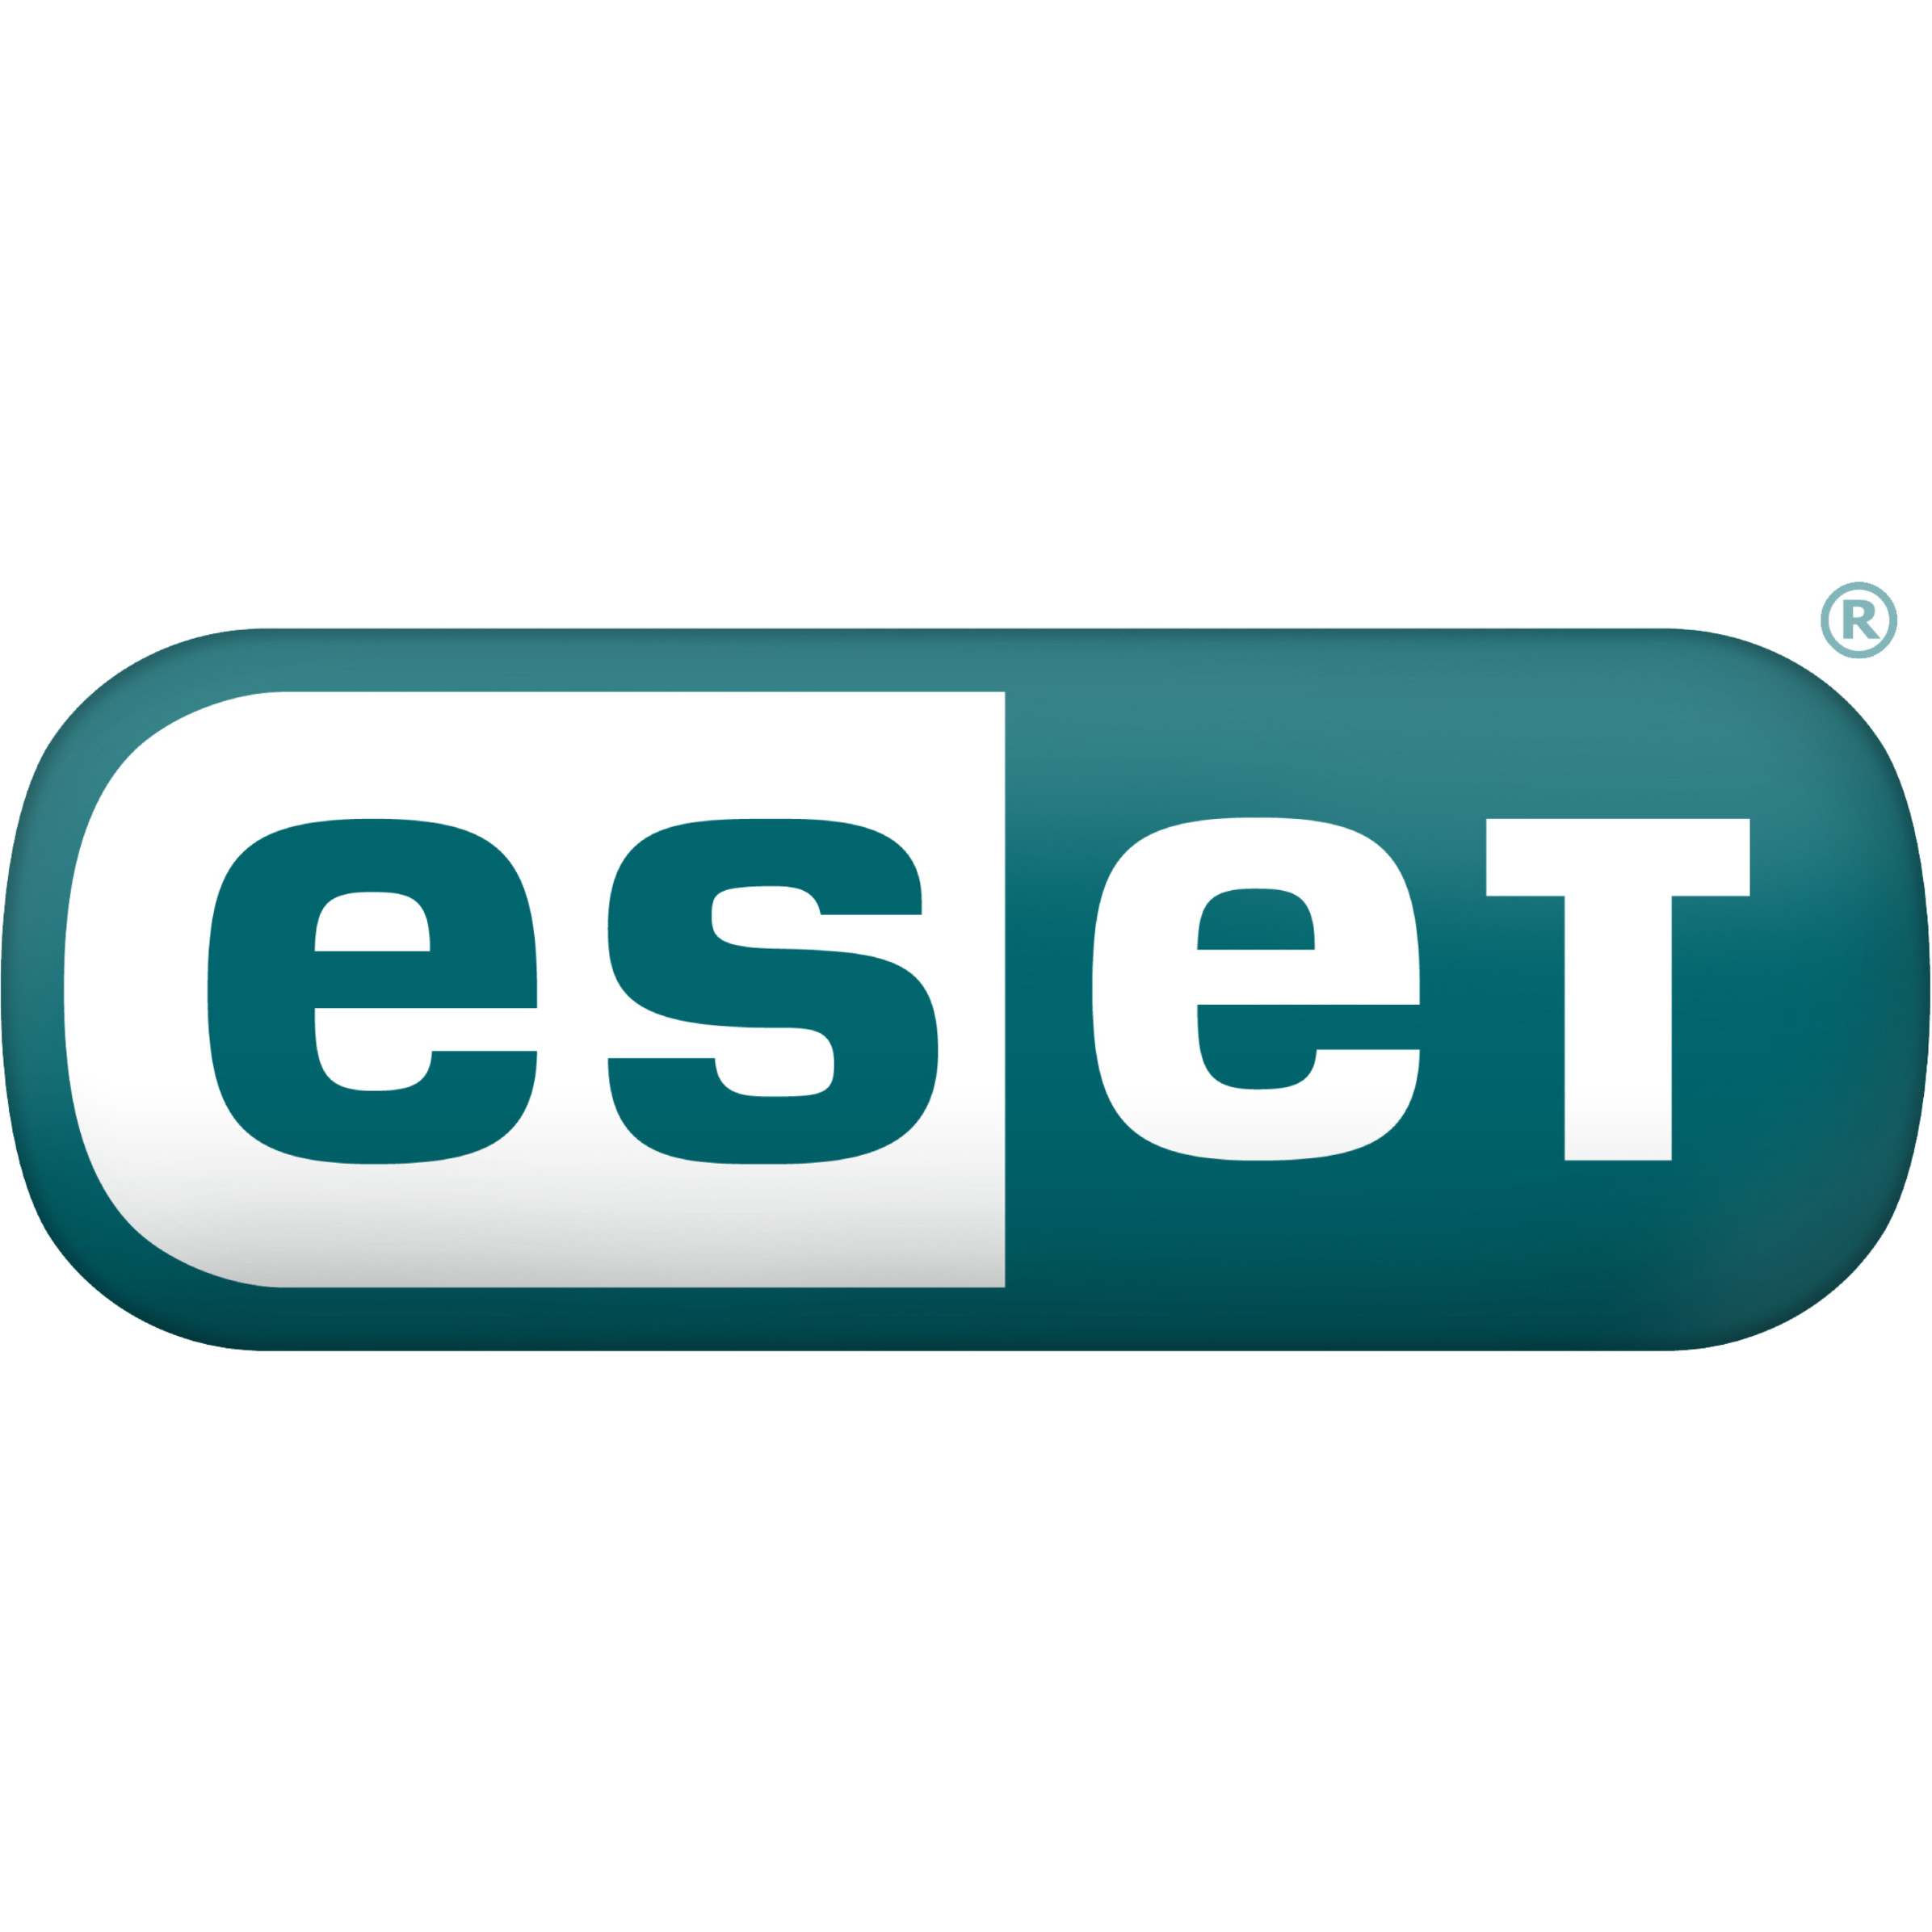 ESET PROTECT Mail PlusSubscription License1 SeatPrice Level B1VolumePC